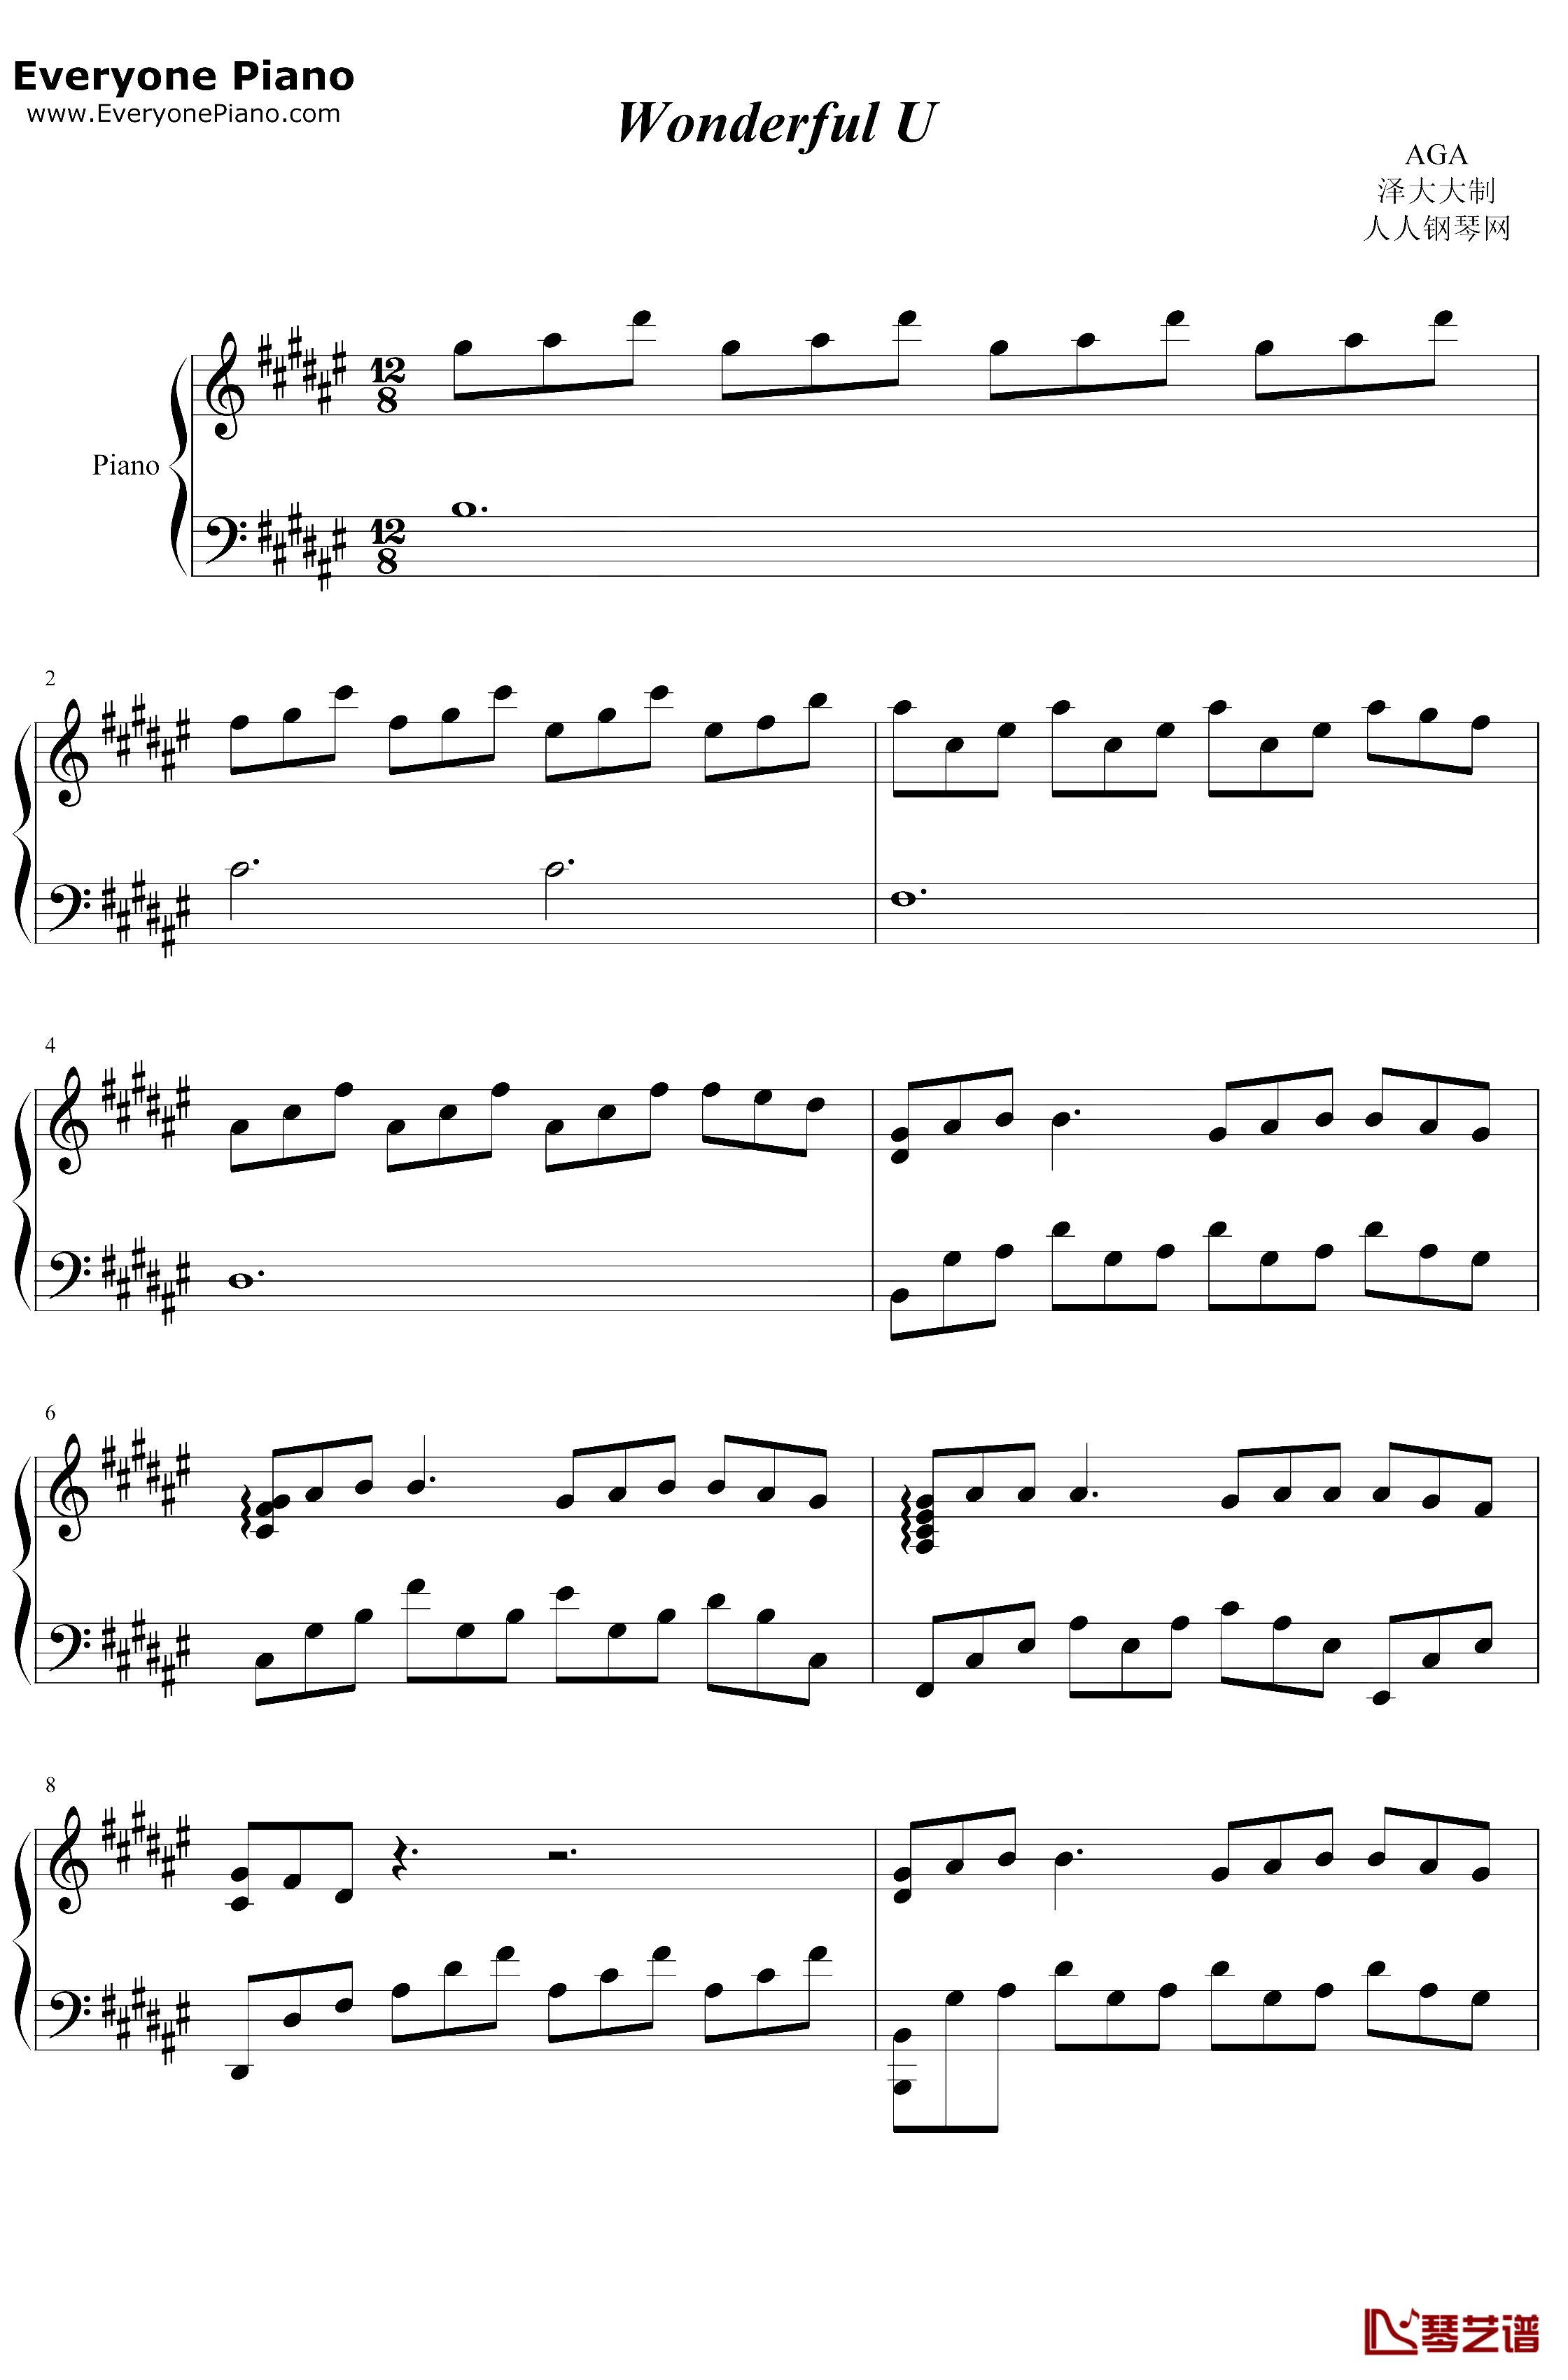 WonderfulU钢琴谱 AGA 完美独奏版1